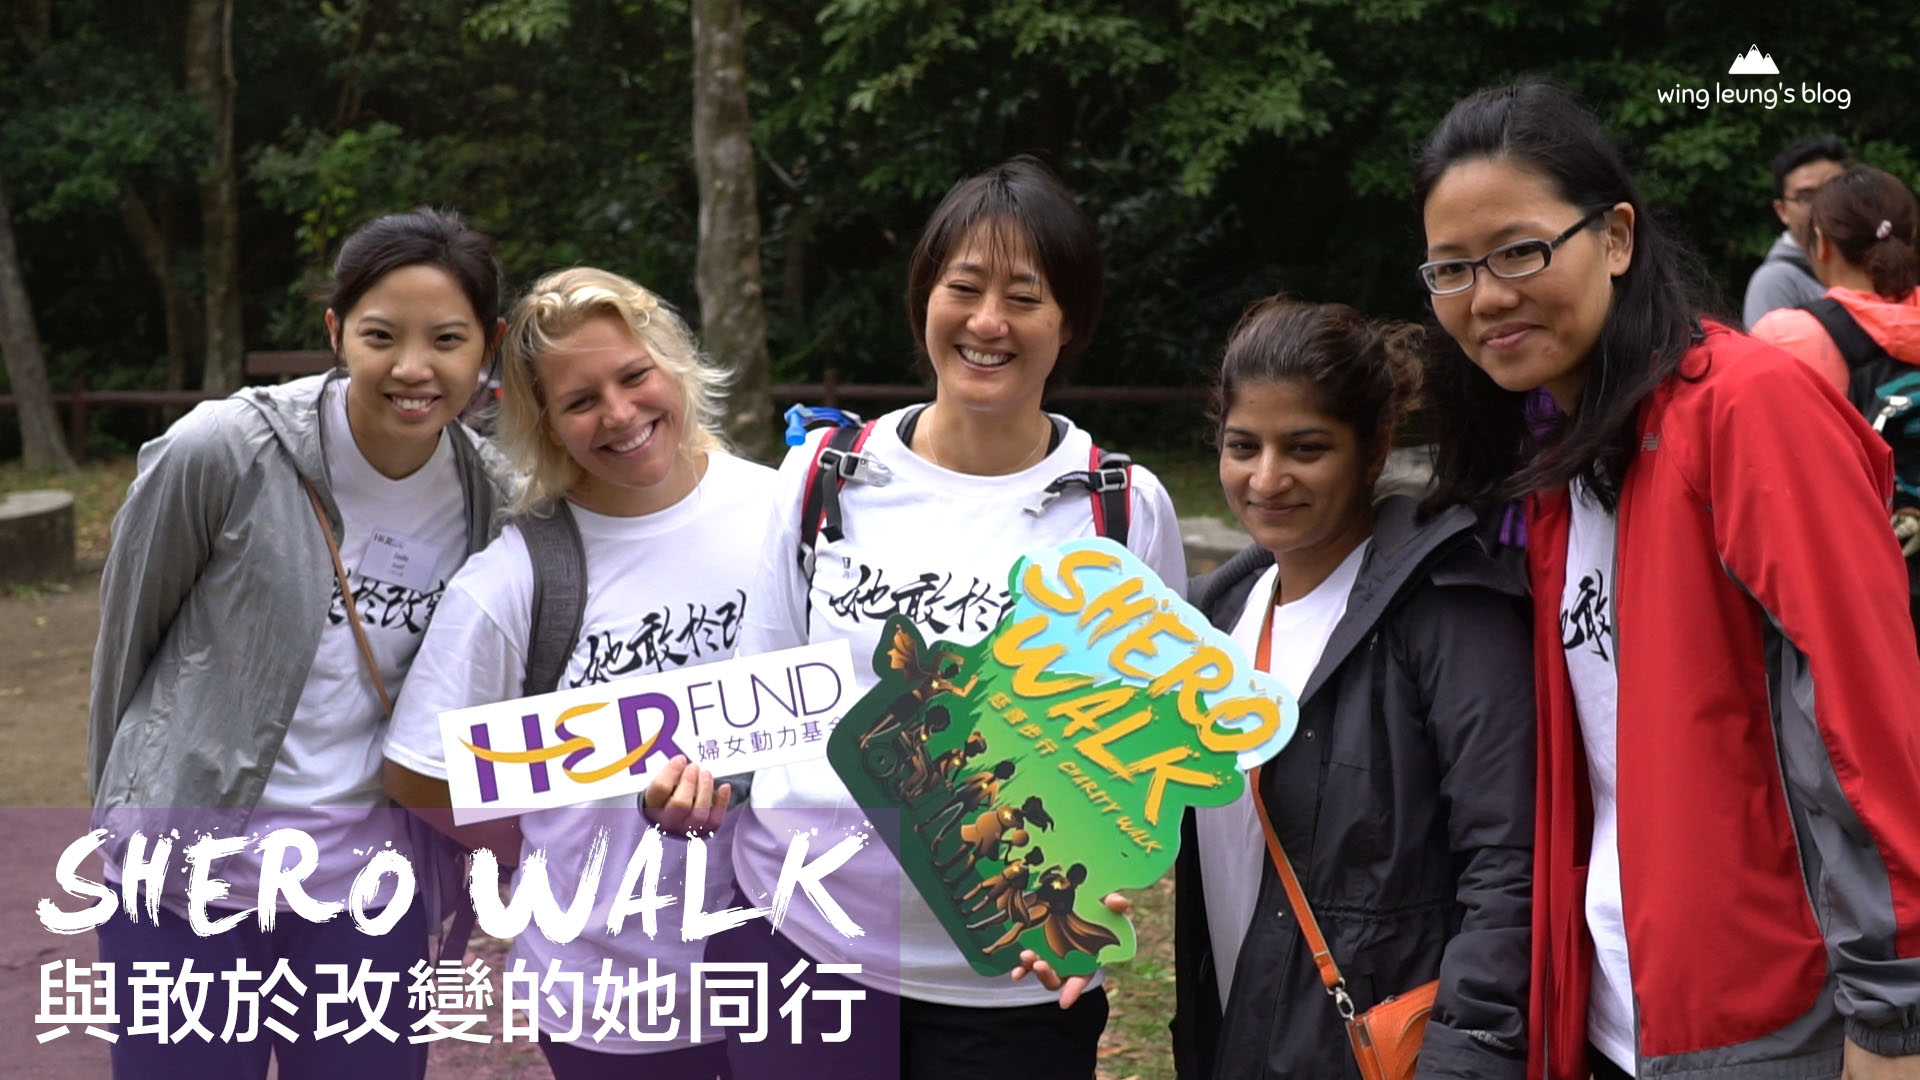 SHERO WALK 與敢於改變的她同行 – 婦女動力基金慈善步行